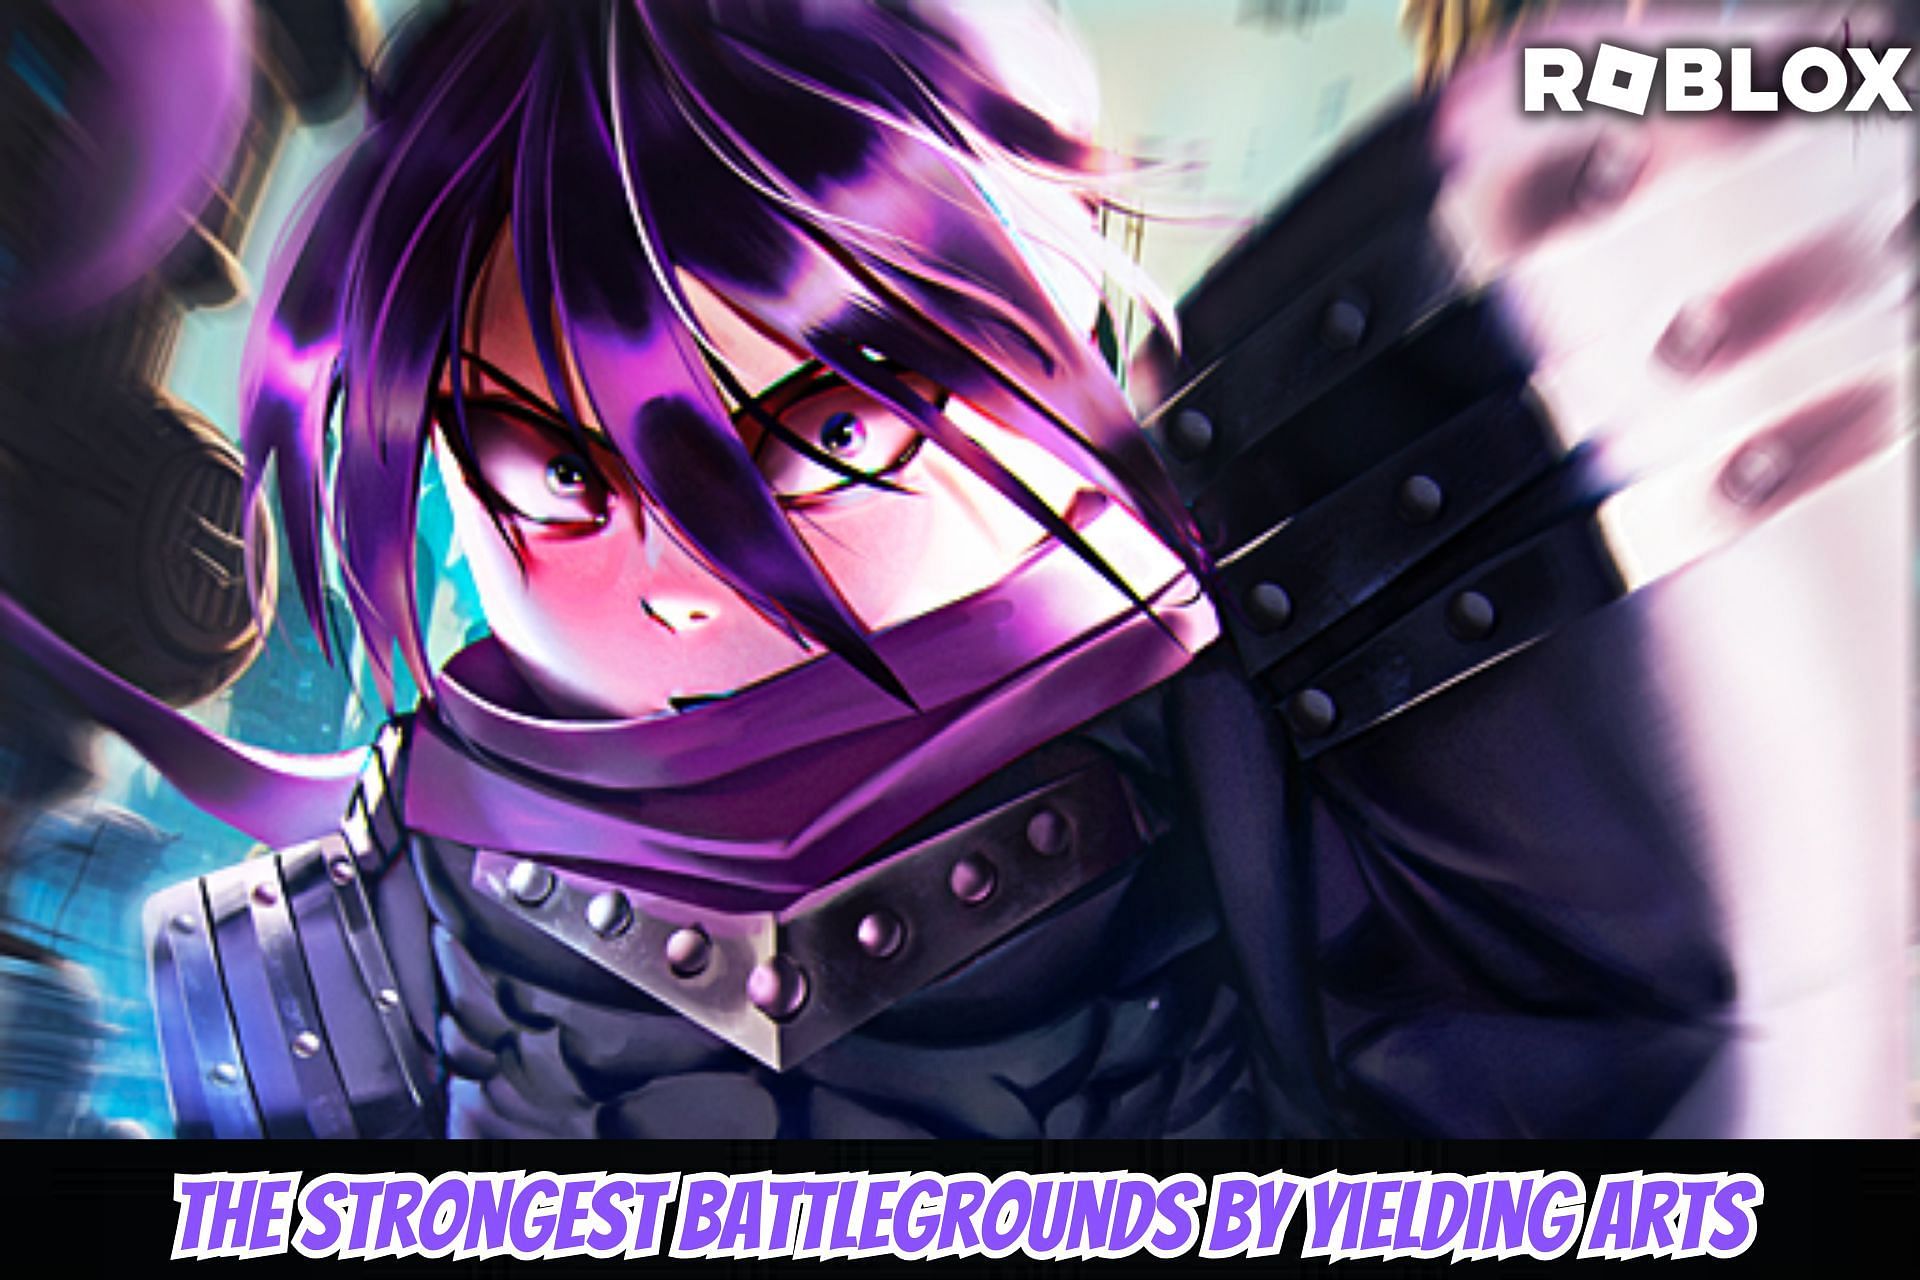 When saitama real life hits - ROBLOX Strongest Battlegrounds 